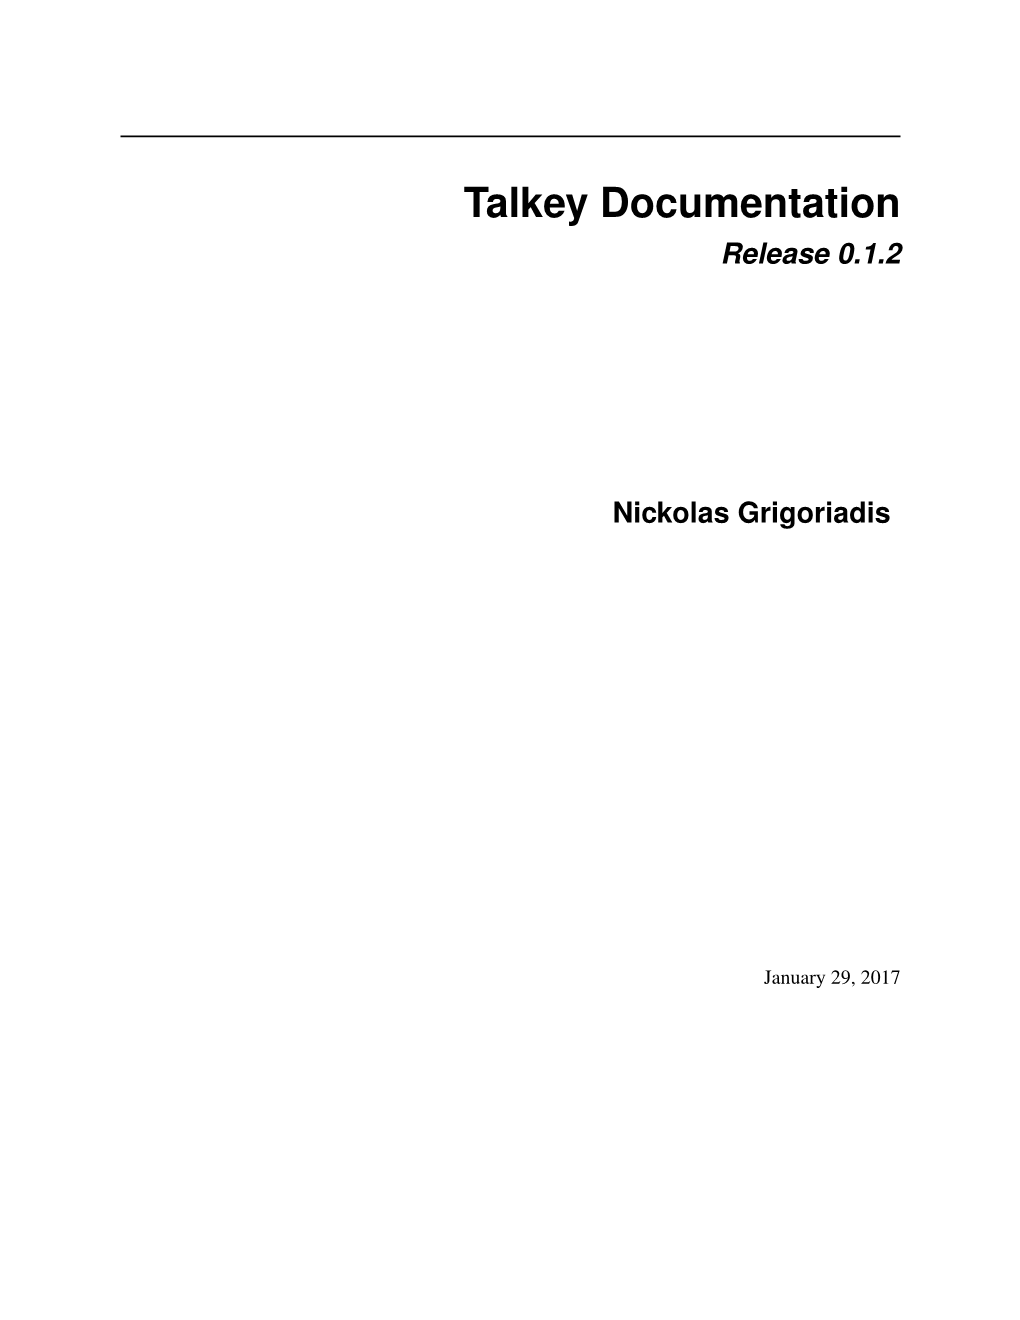 Talkey Documentation Release 0.1.2